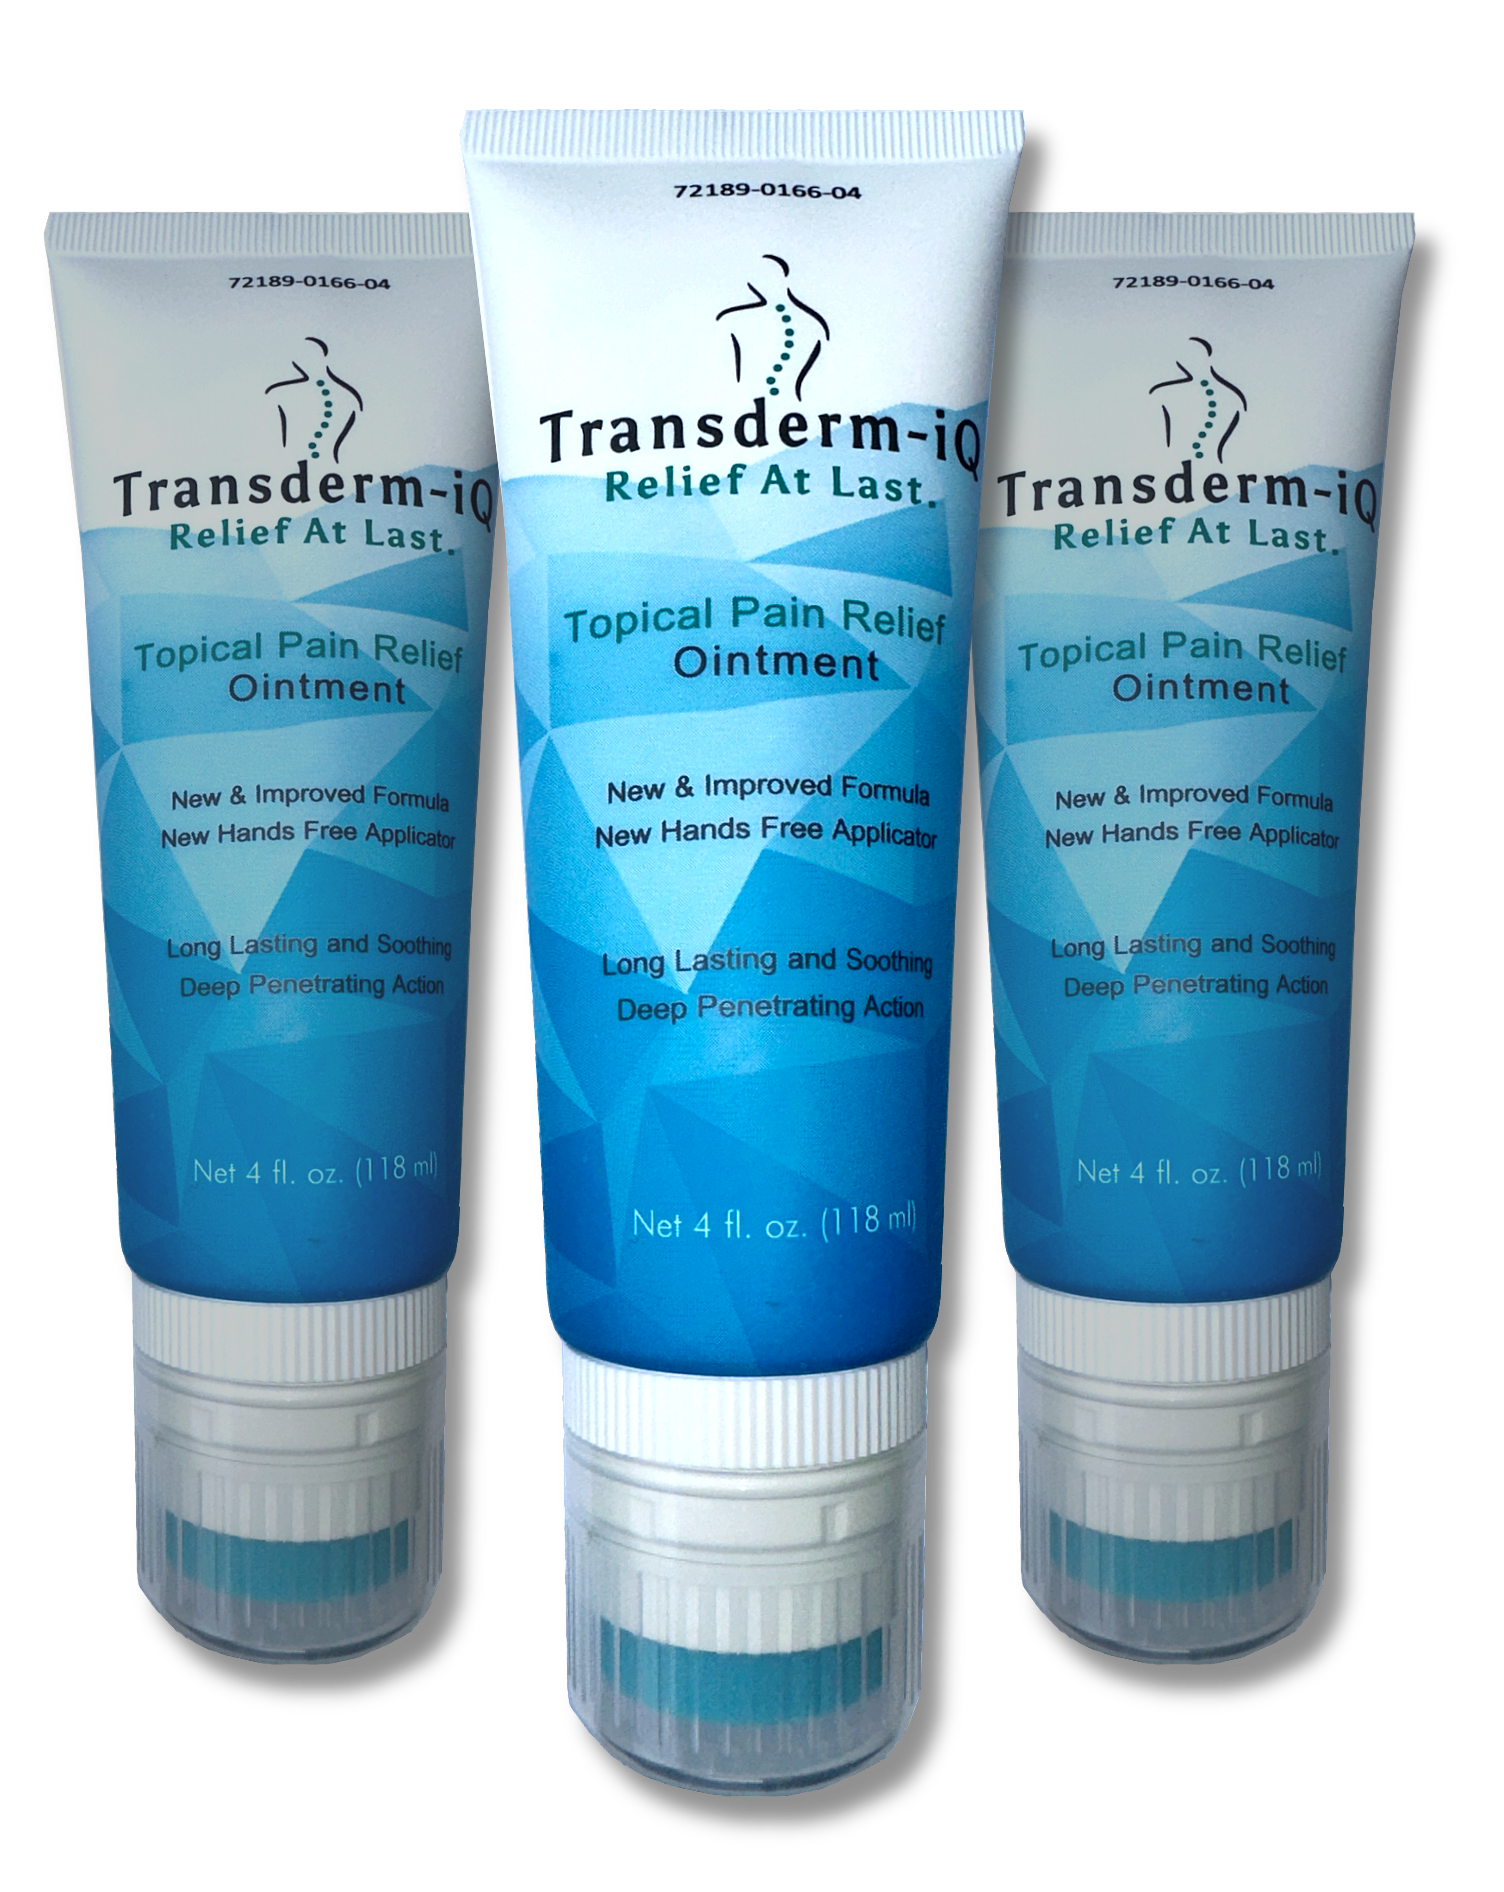 3 Transderm-iQ Ointment tubes